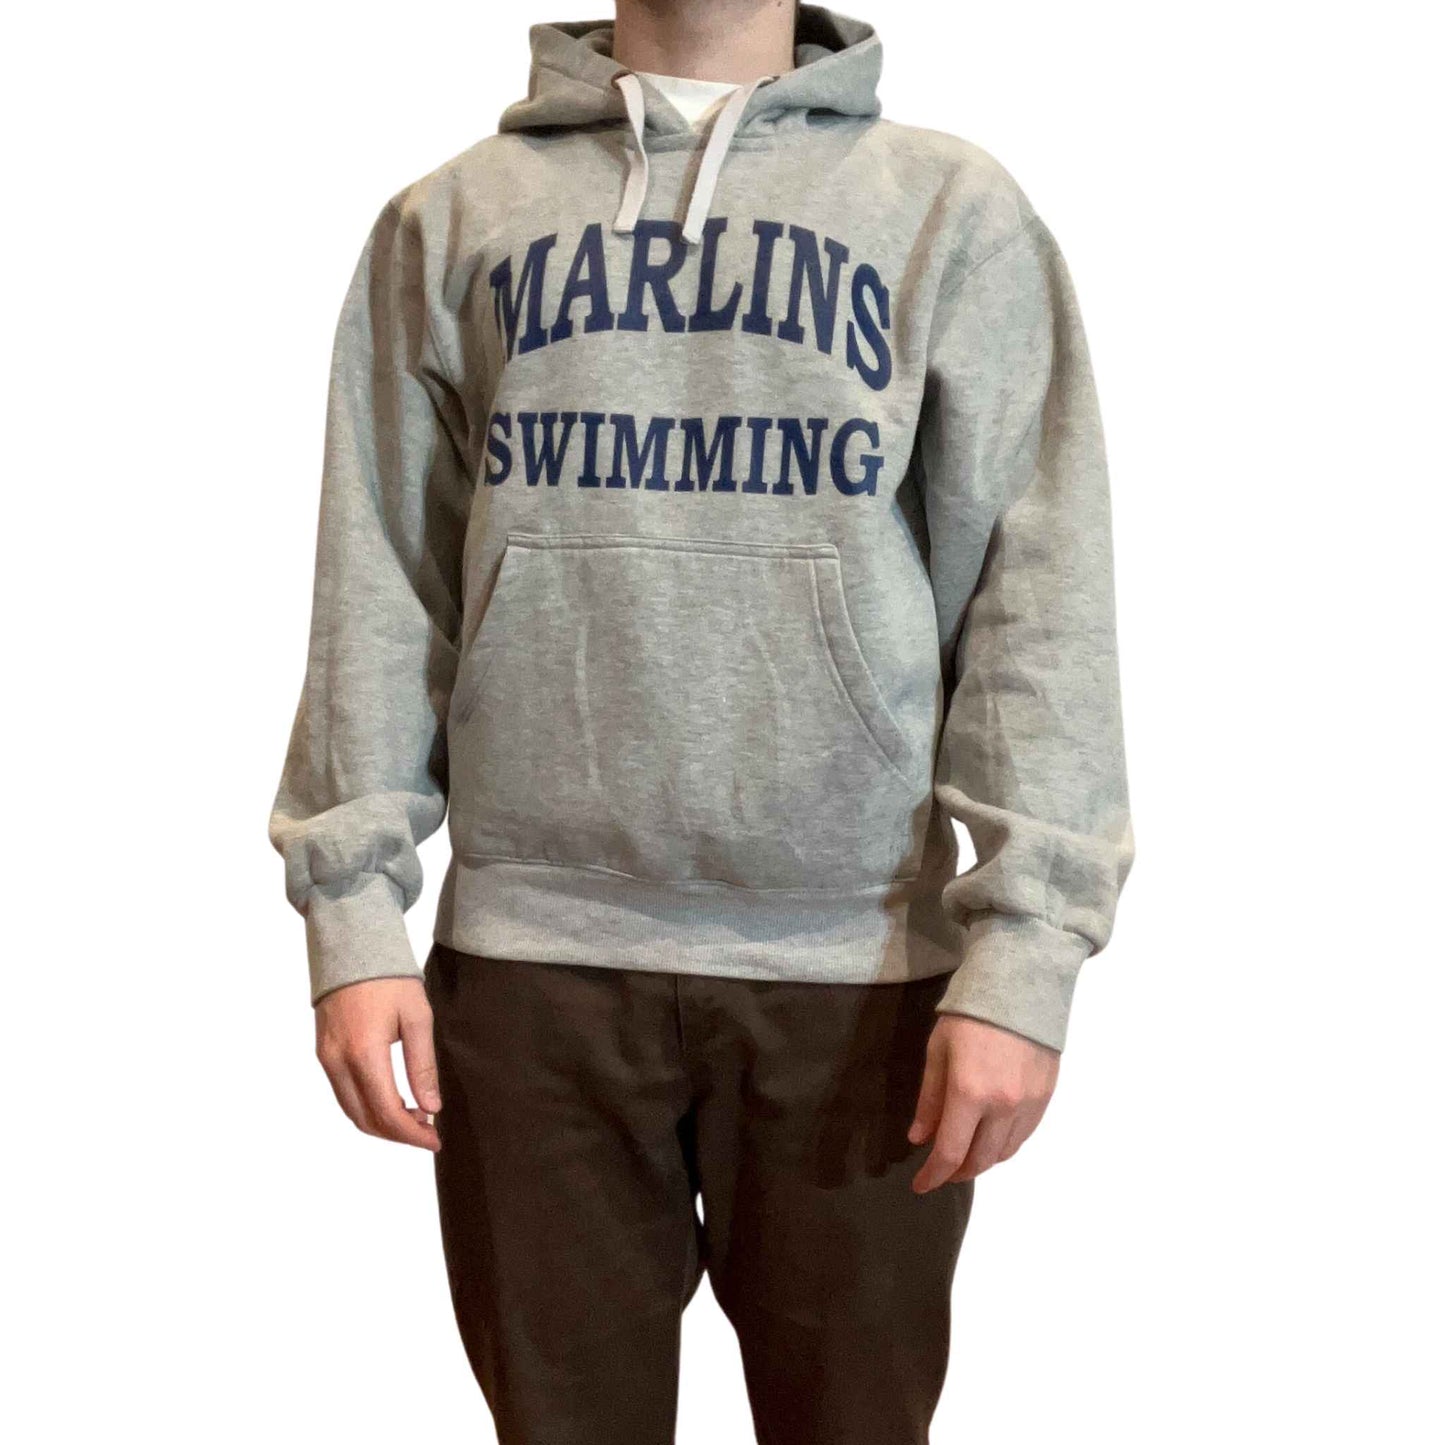 Marlins Swimming: Vintage American Sweatshirt | Size M